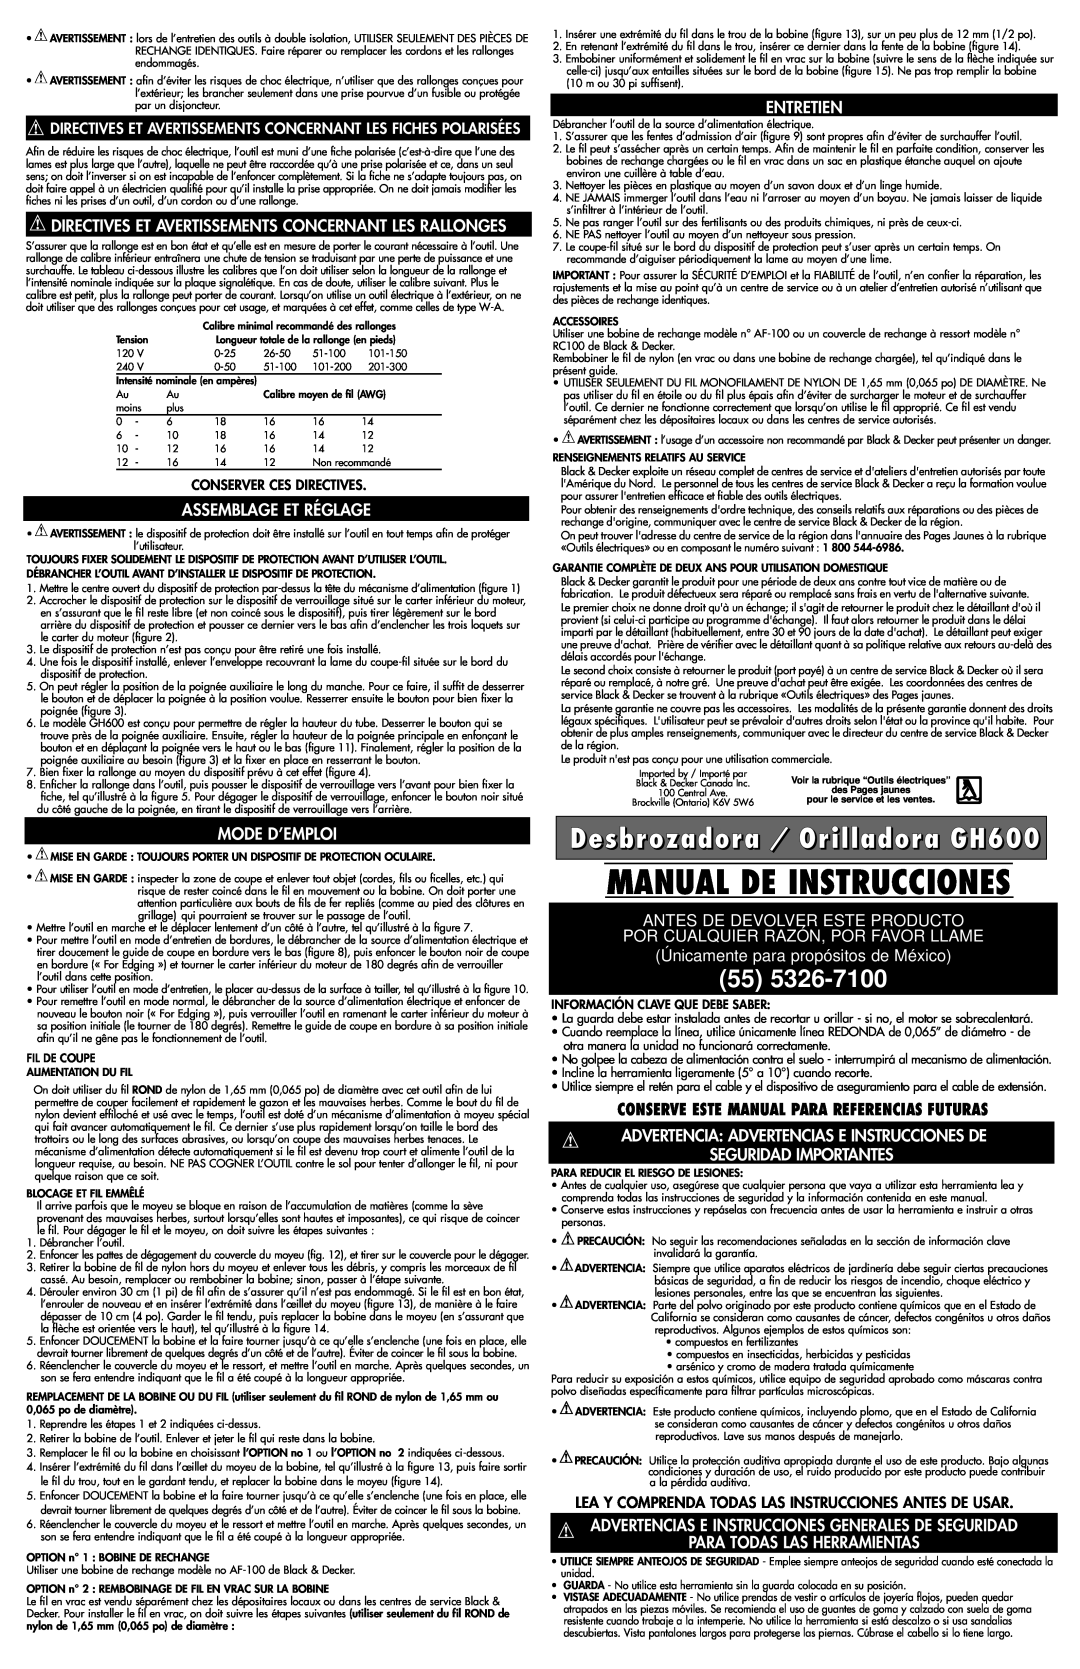 Black & Decker 244137-01 Manual De Instrucciones, Desbrozadora / Orilladora GH600, Assemblage Et Réglage, Mode D’Emploi 